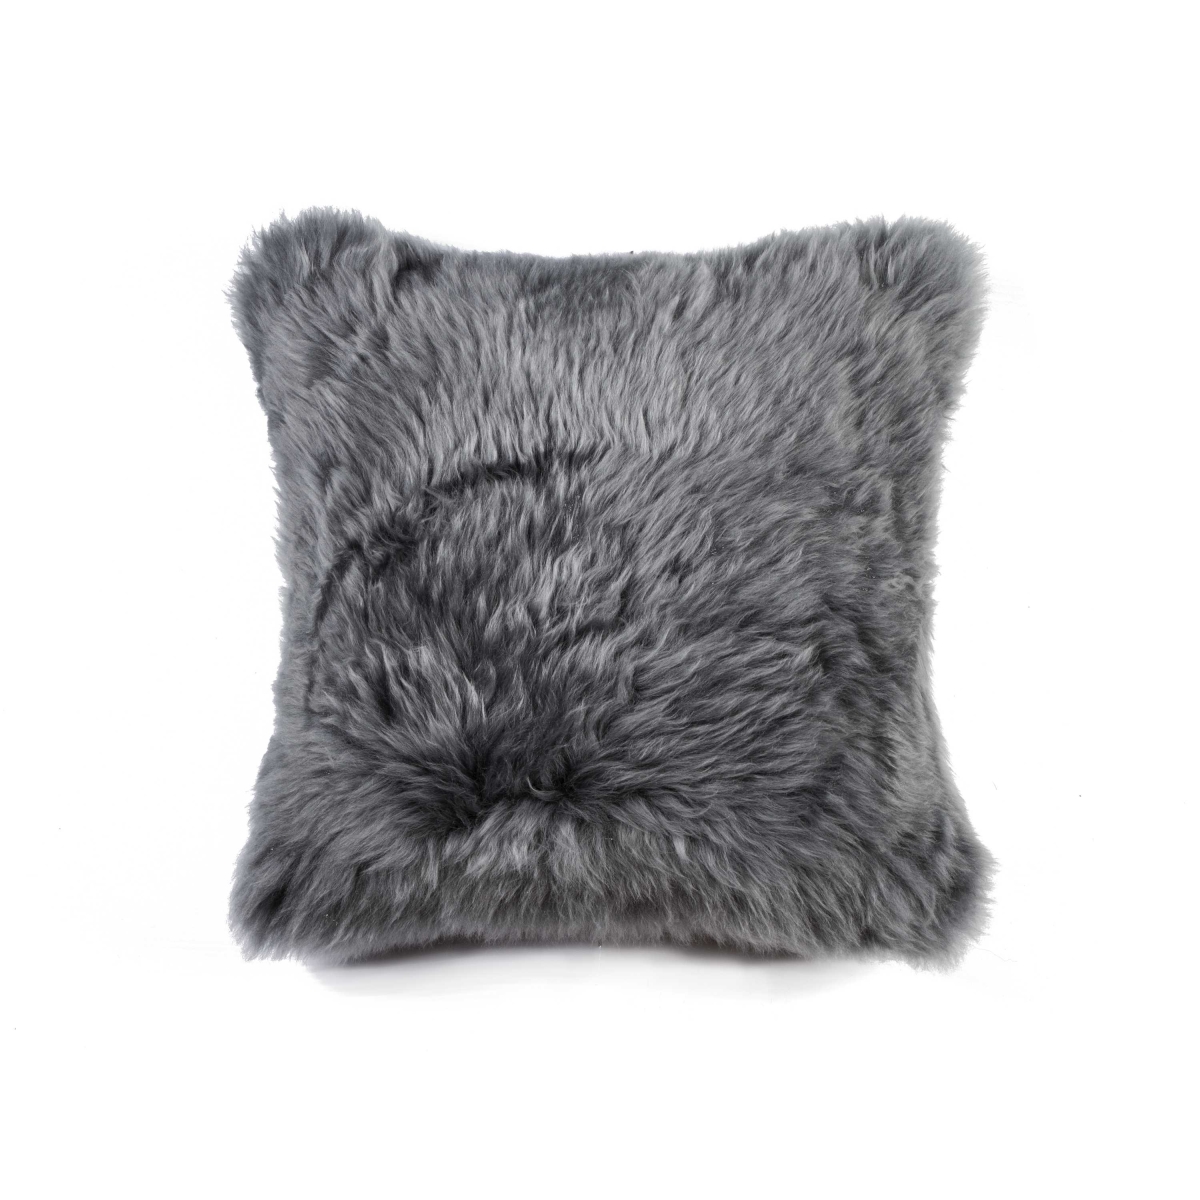 293199 18 X 18 In. New Zealand Sheepskin Pillow Grey